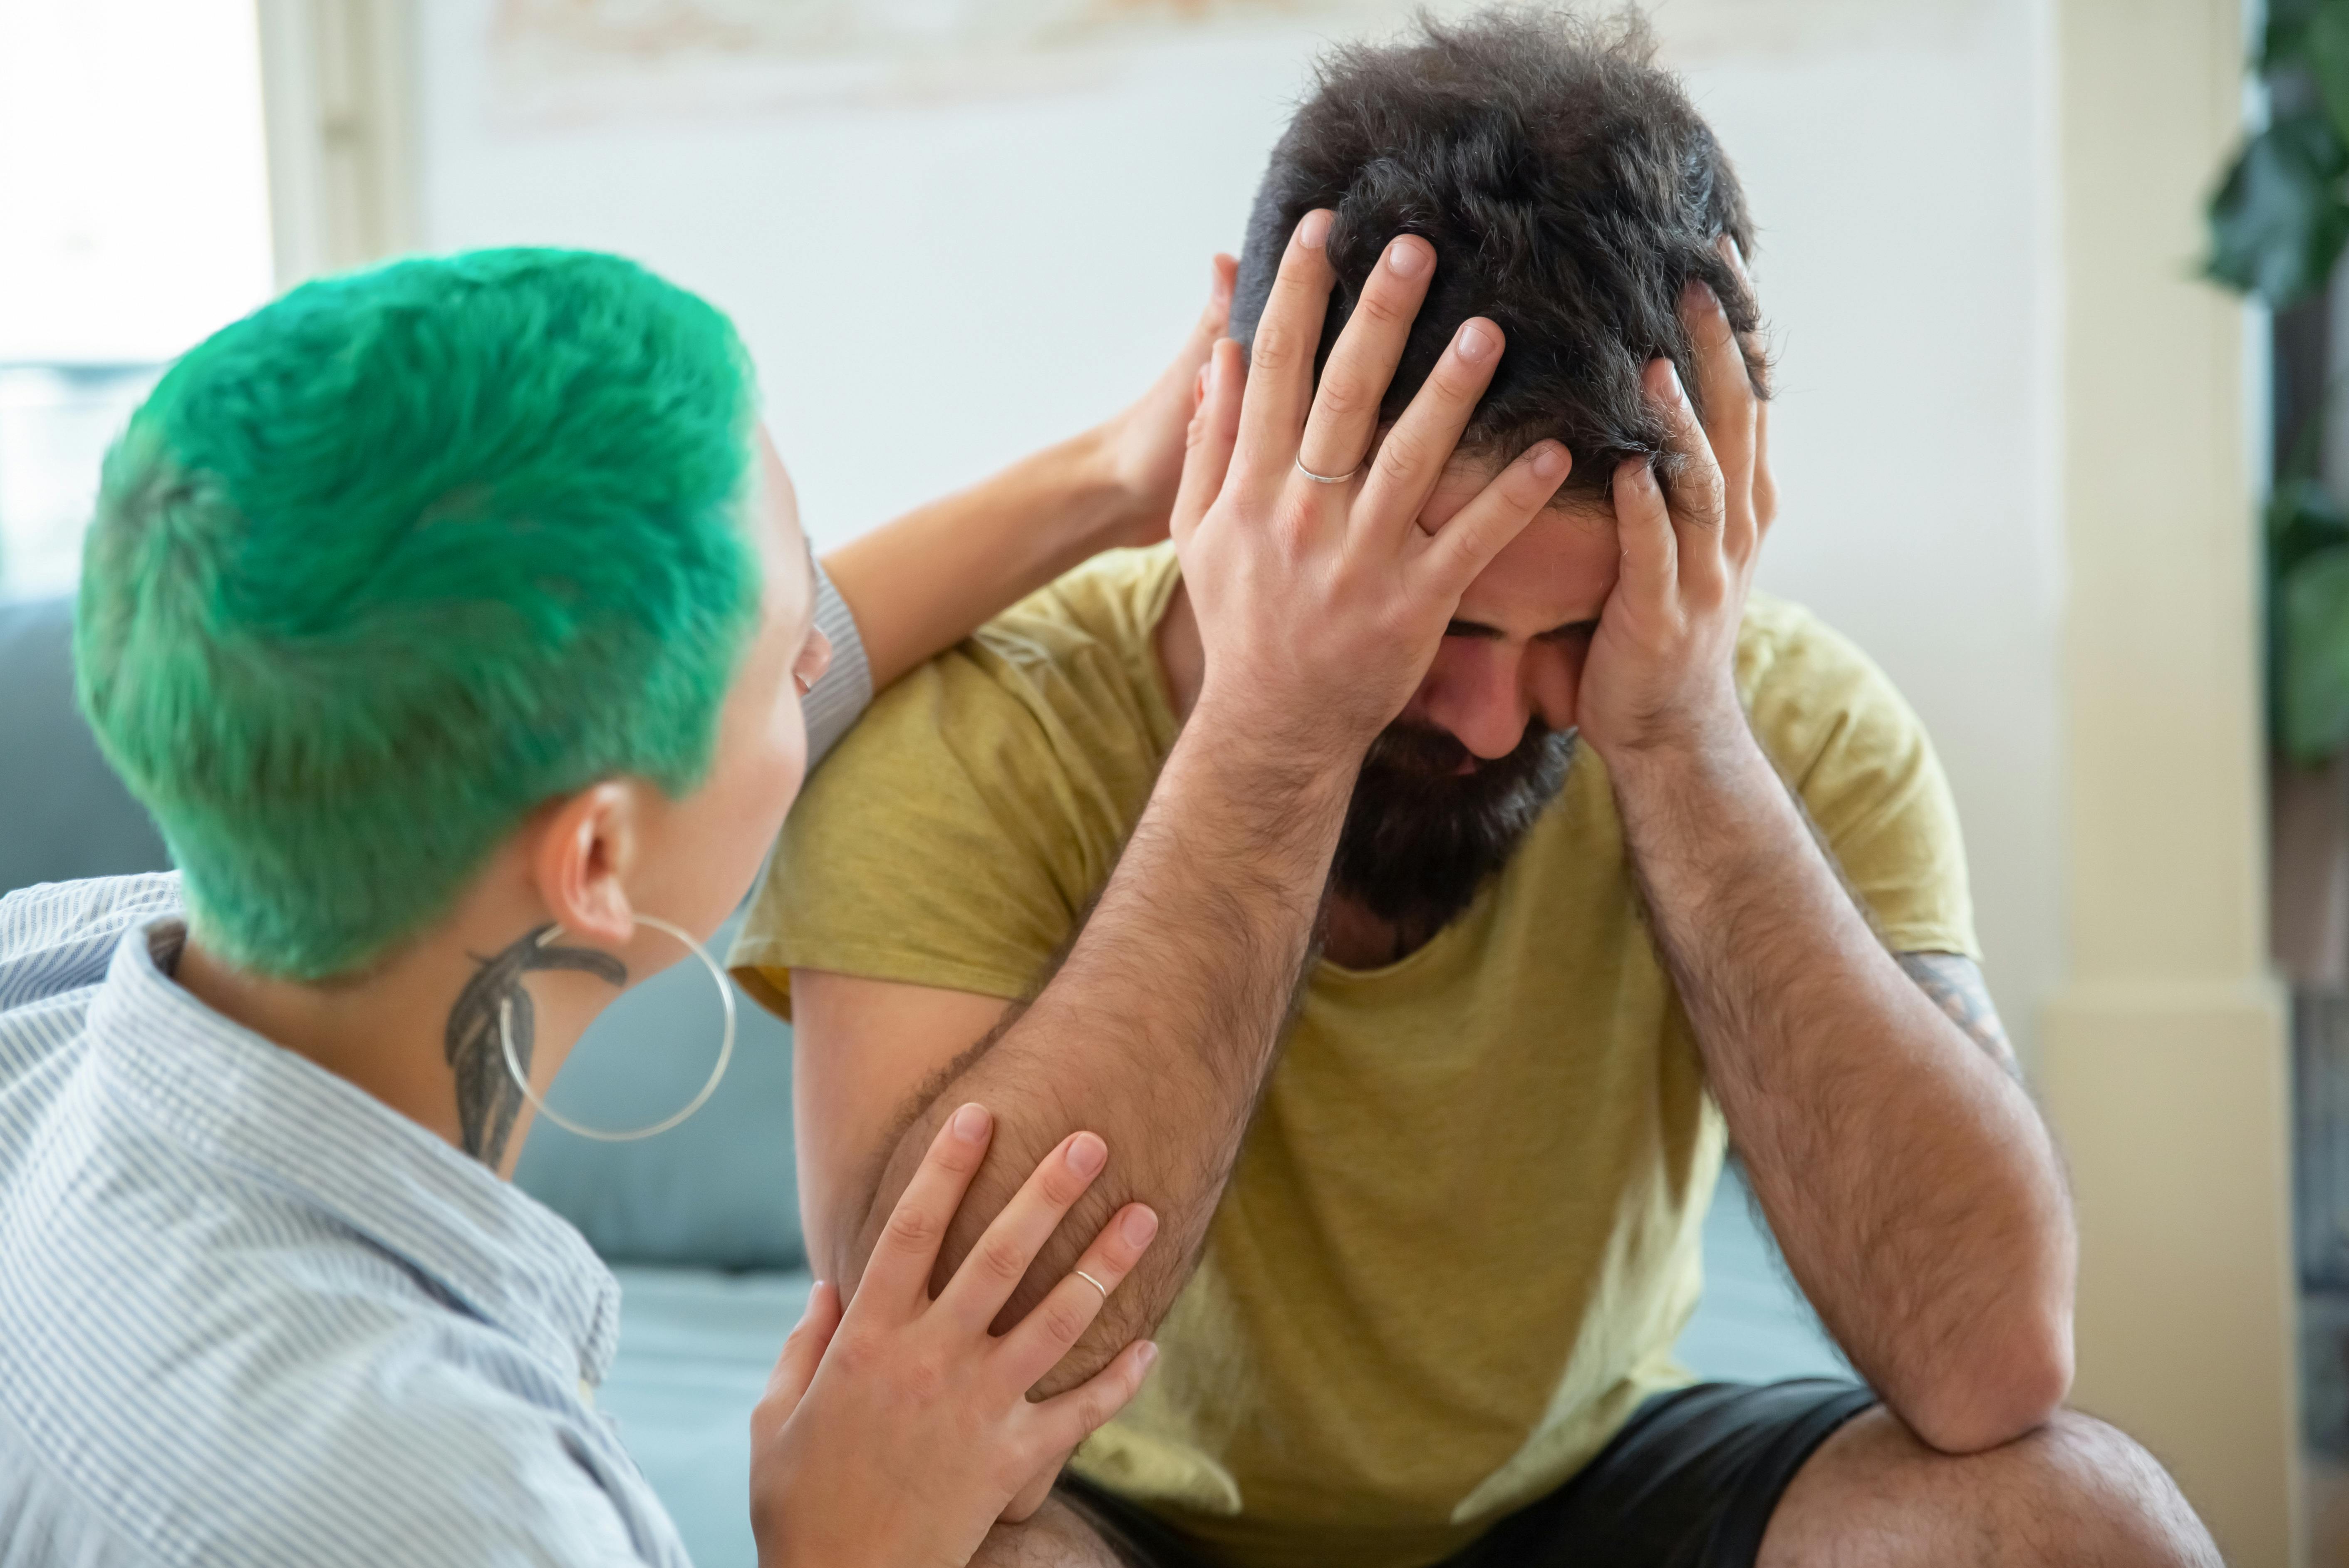 A woman comforting an upset man | Source: Pexels